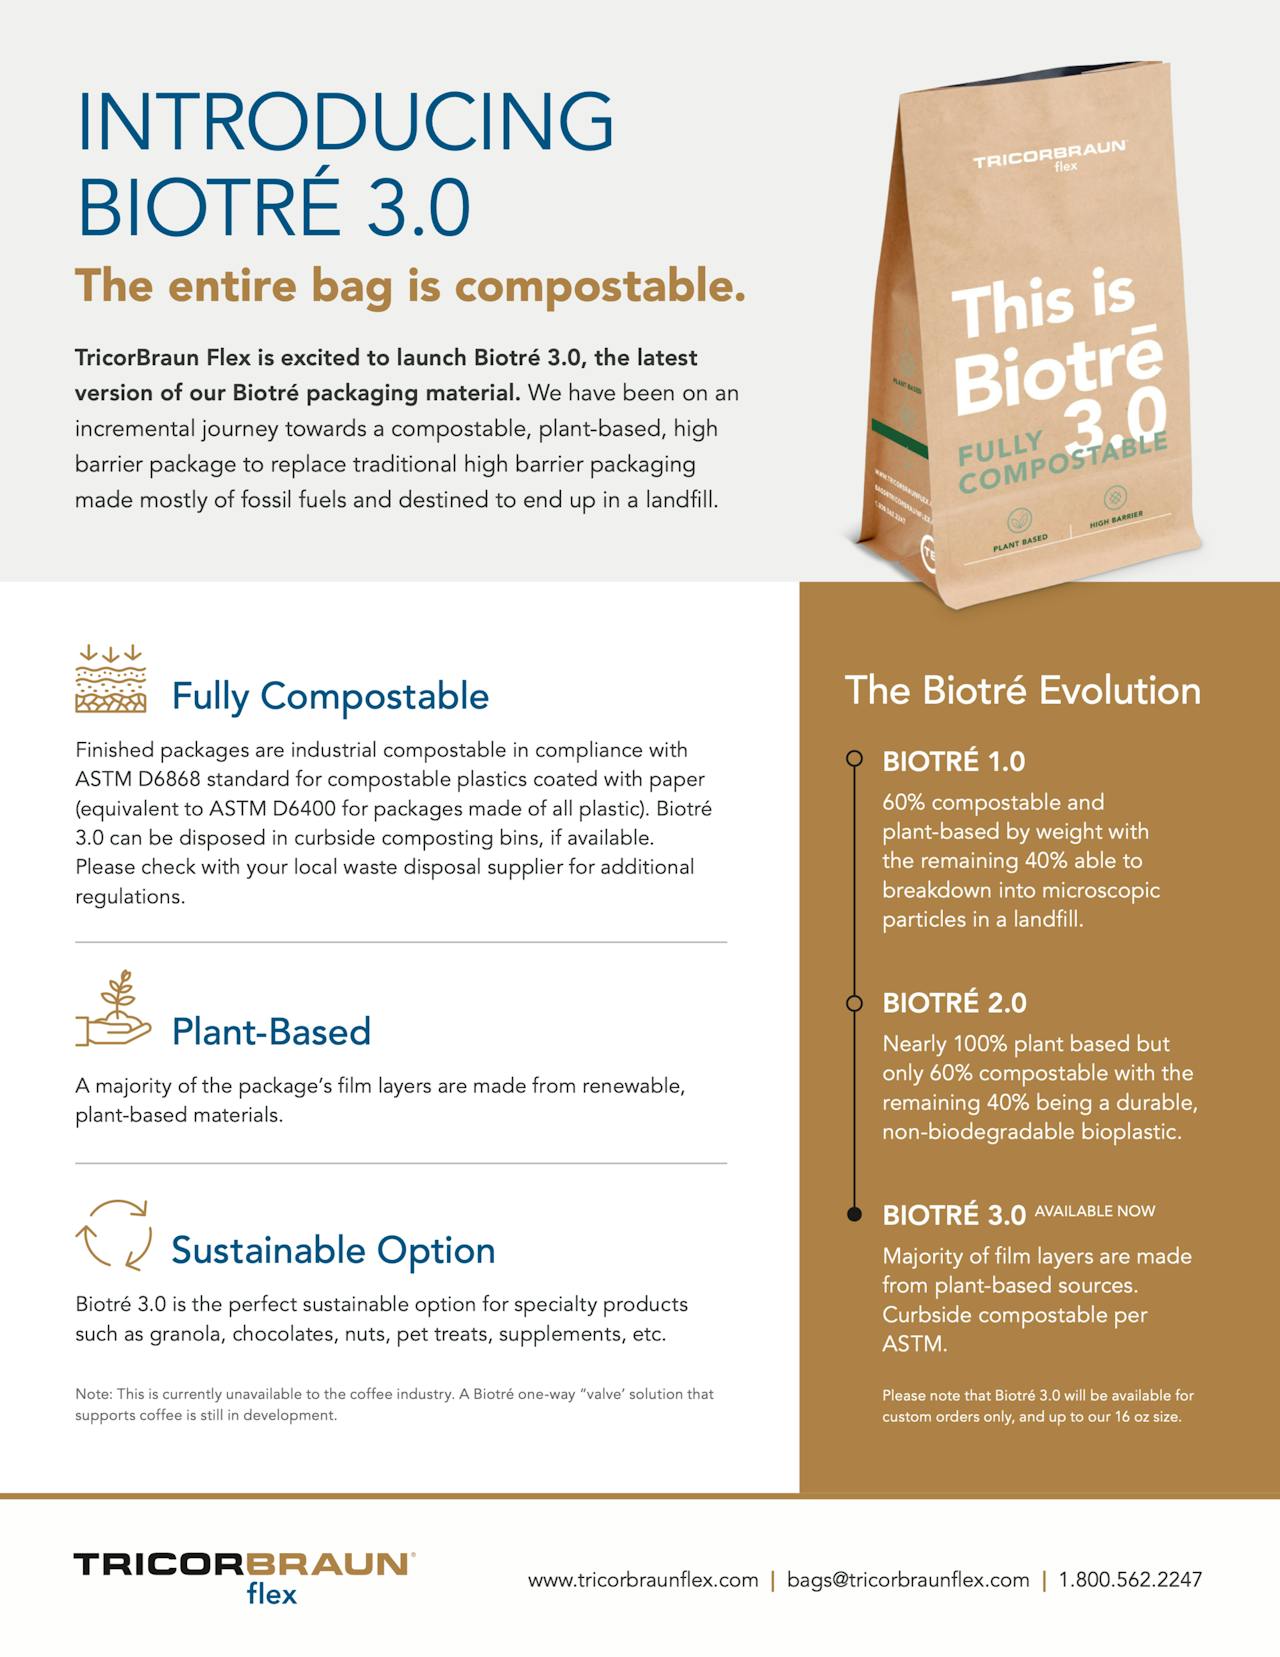 TriCorBraun's Biotre 3.0 Compostable Bags